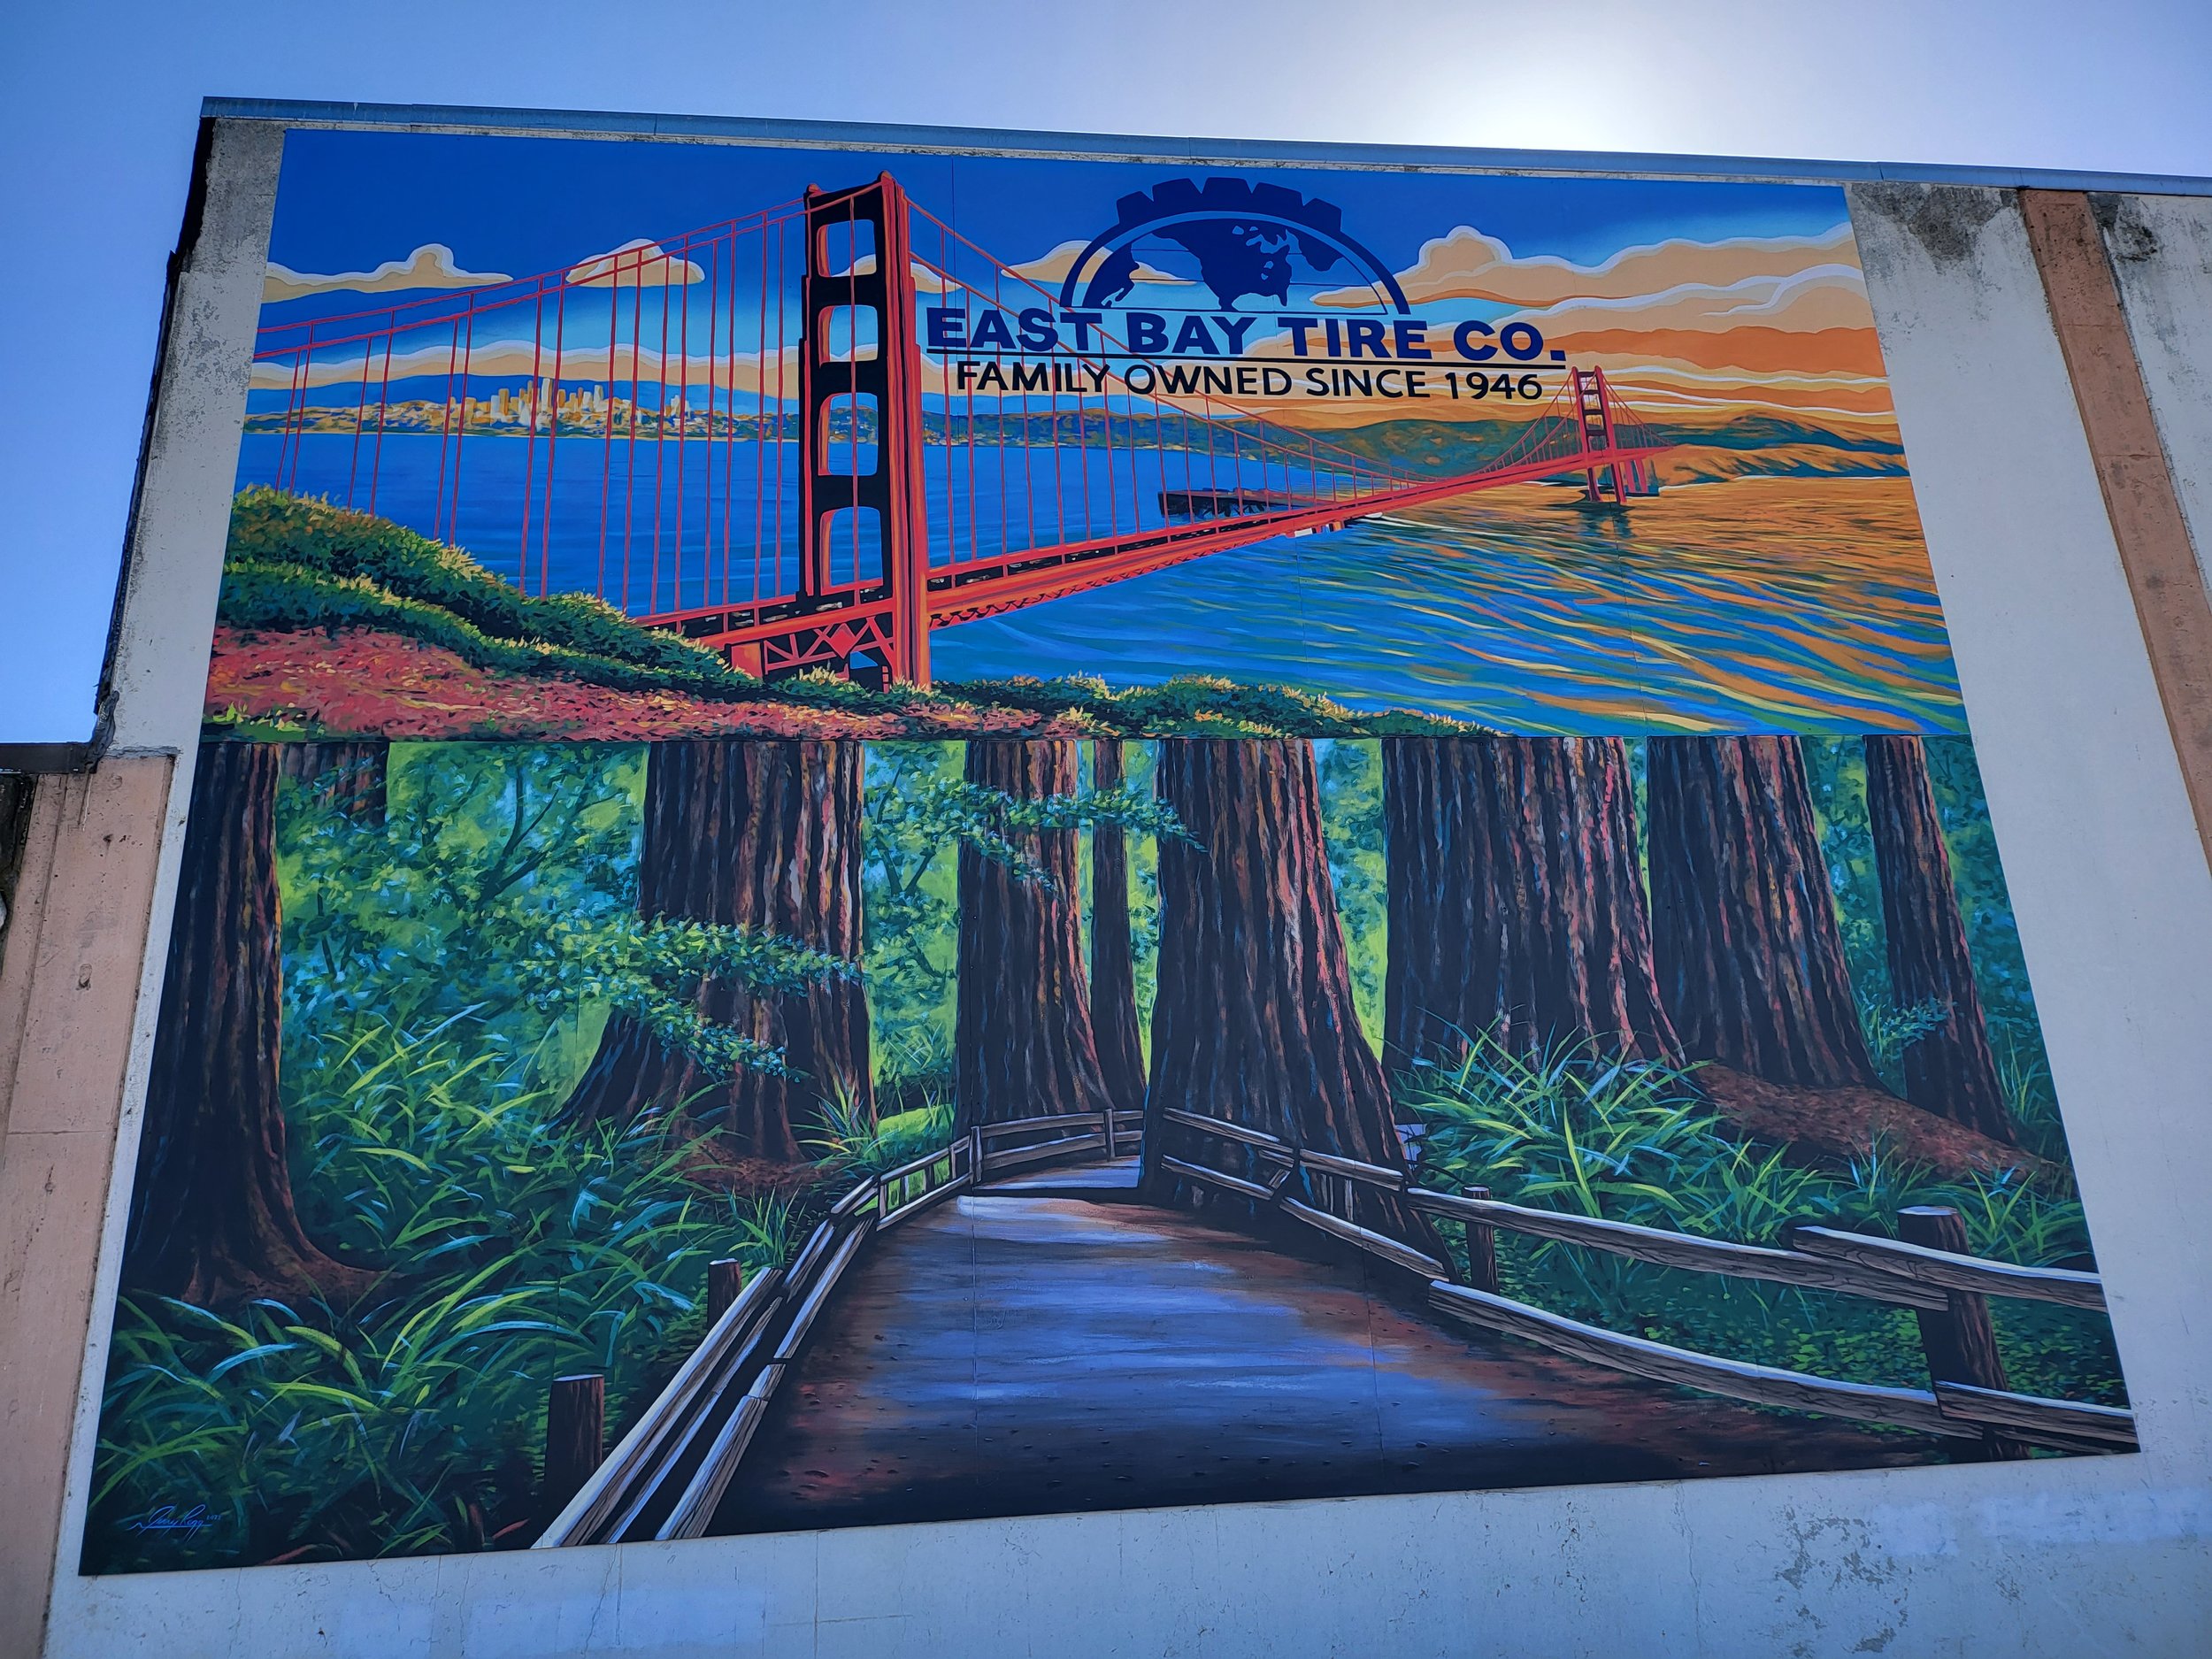 Exterior mural for Easy Bay Tire Co. - San Miguel, California